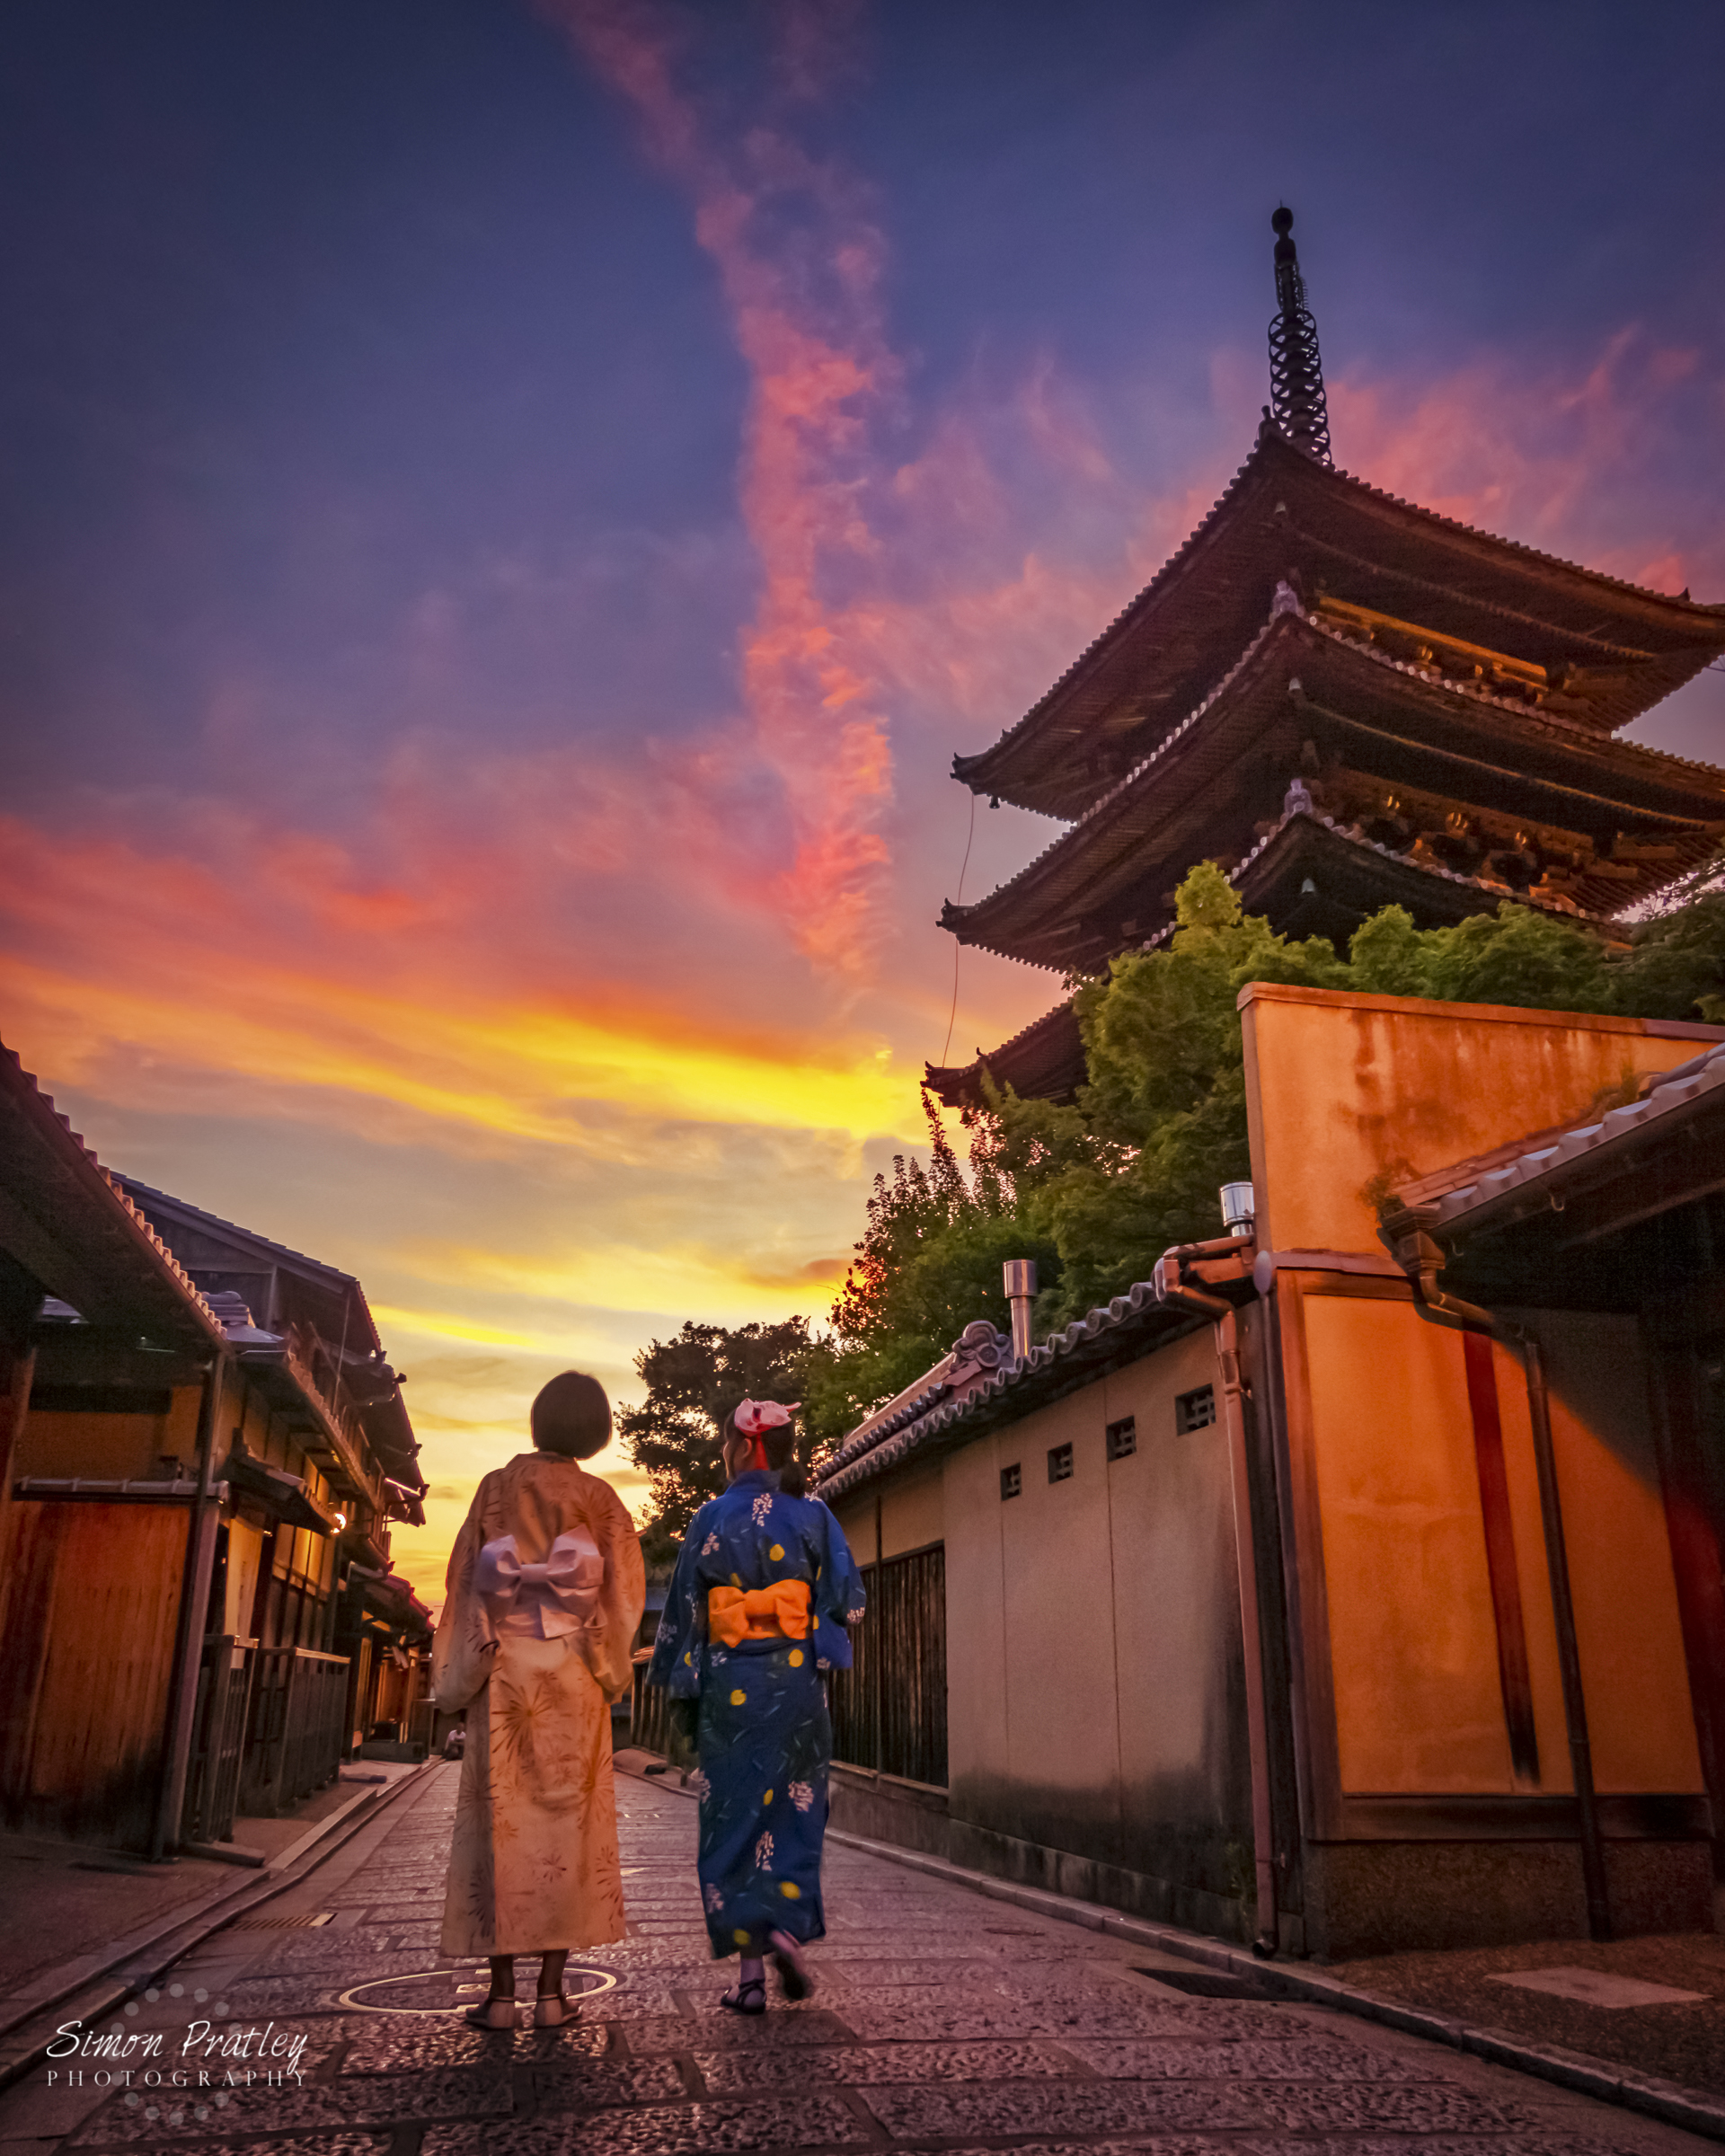 Evening with Kimonos at the Hōkanji Temple